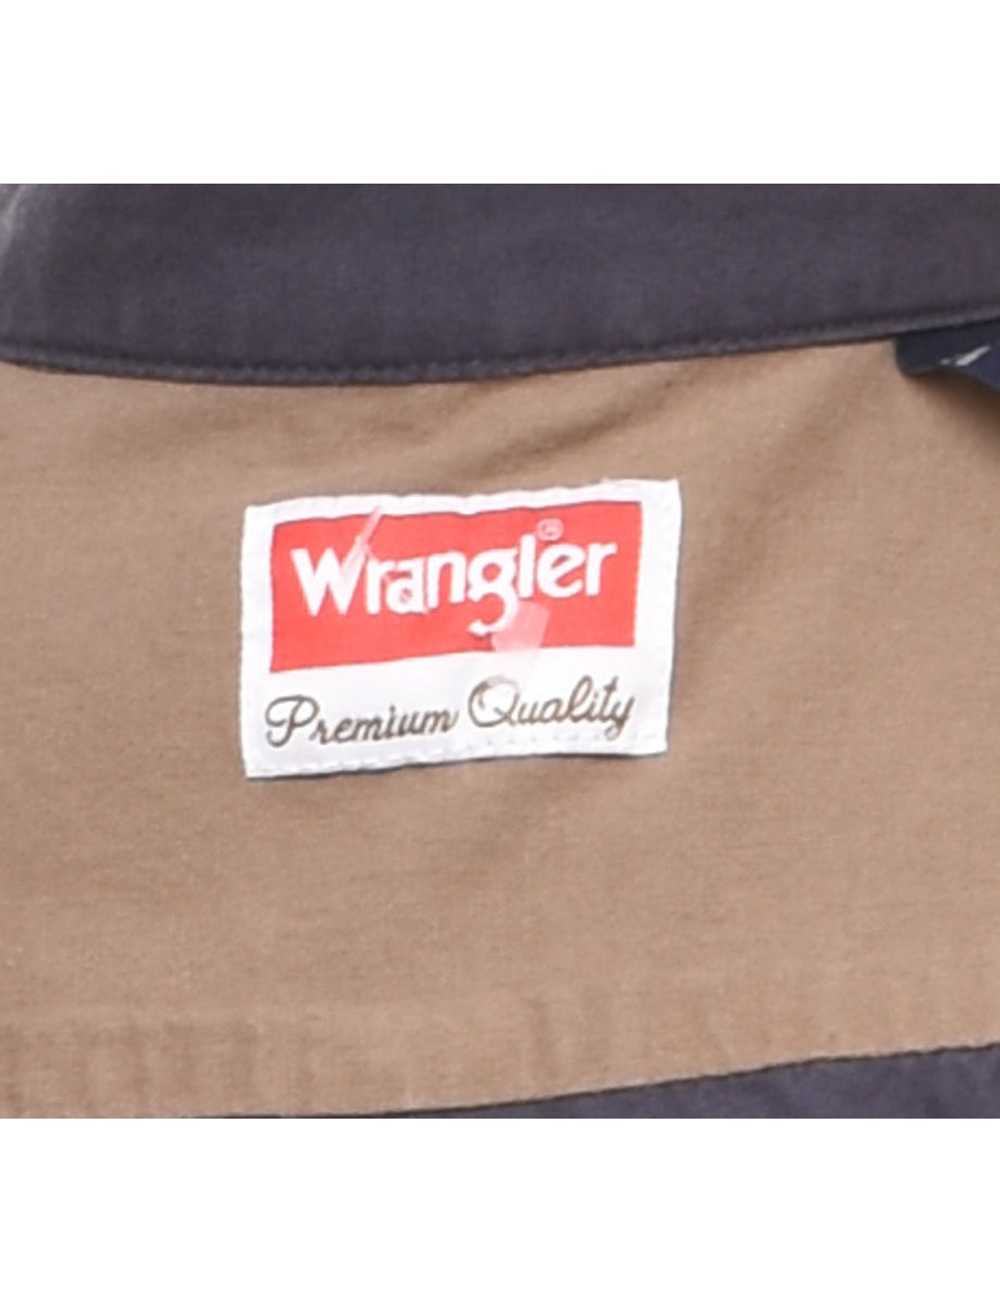 Wrangler Shirt - S - image 4